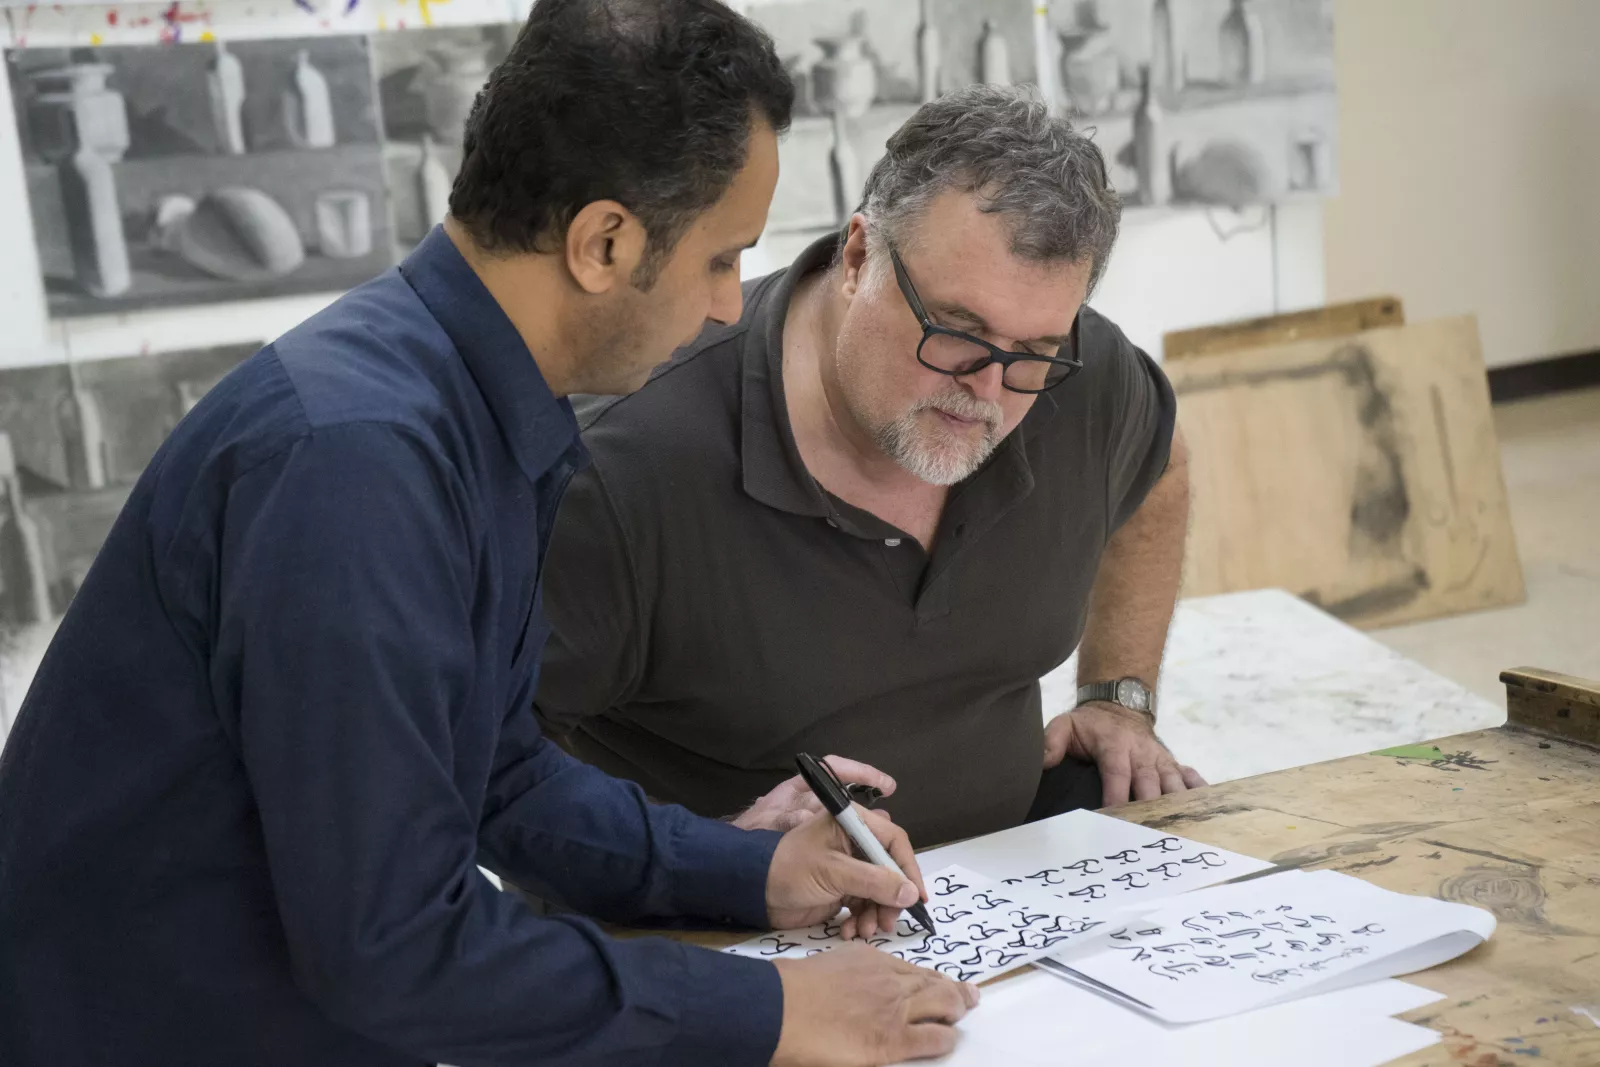 Professor Brian Meunier practices calligraphy